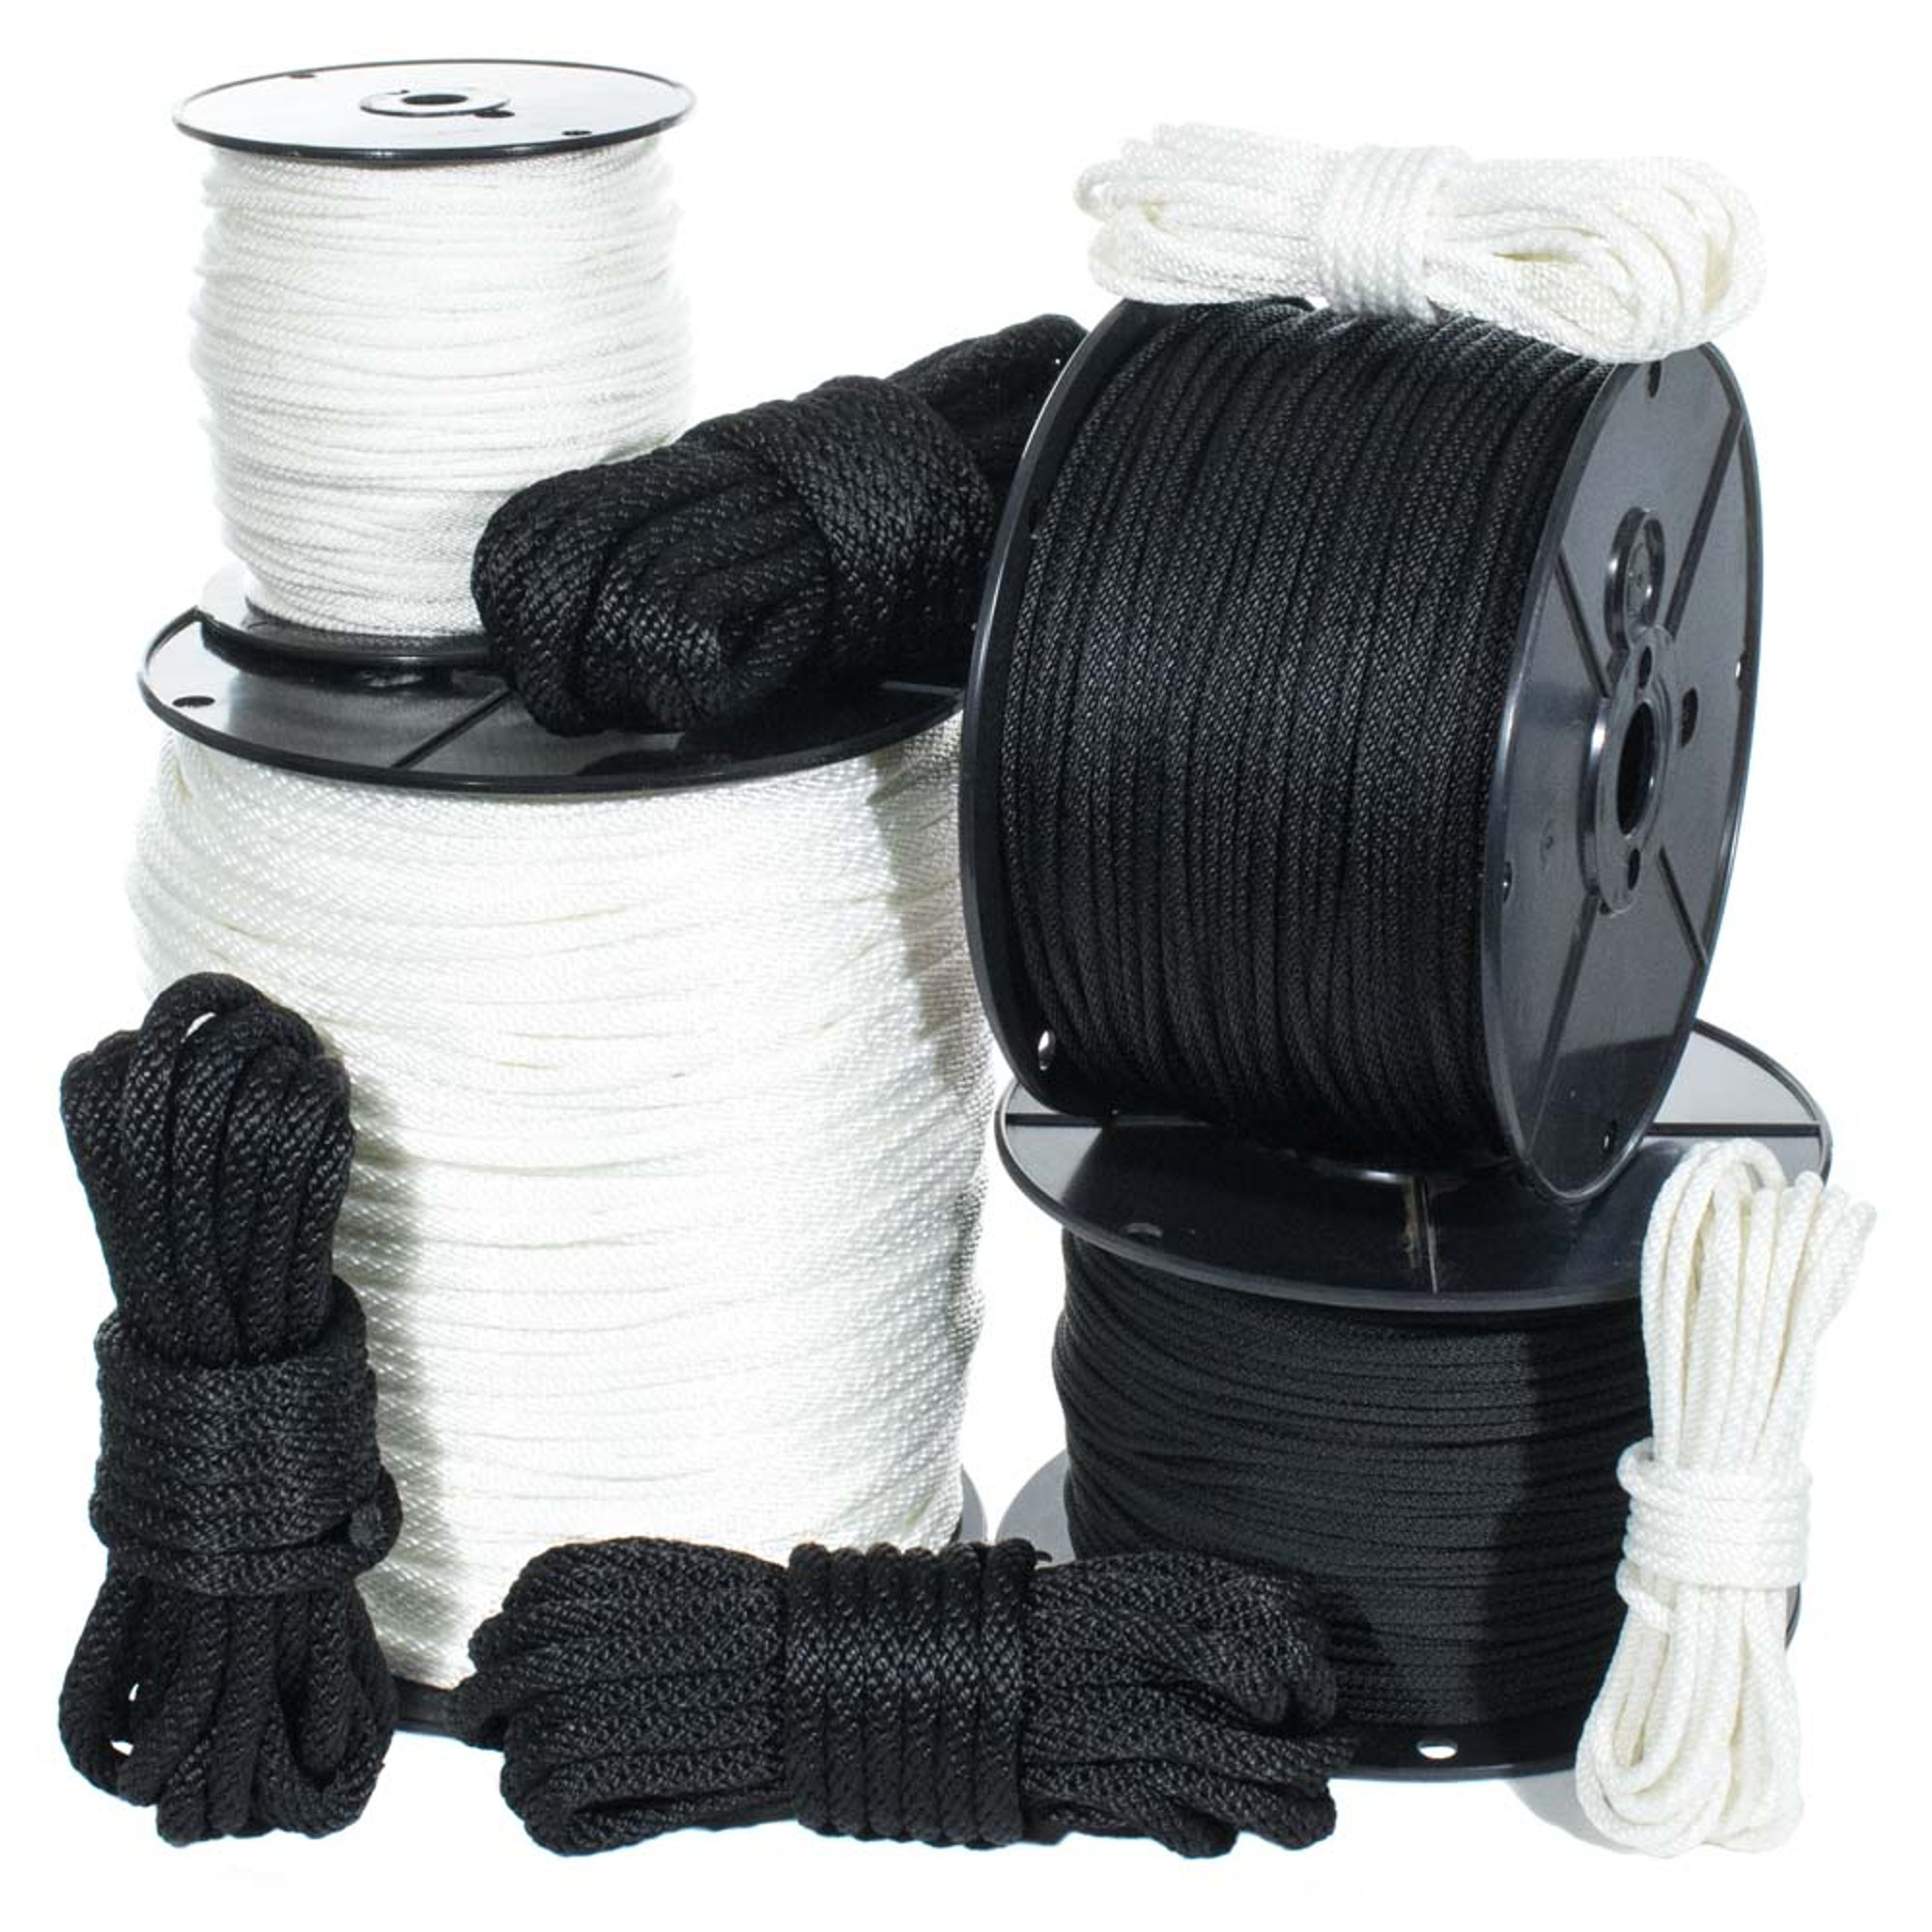 Golberg Solid Braid Black or White Nylon Rope 1/8-inch, 3/16-inch, 1/4-inch, 5/16-inch, 3/8-inch, 1/2-inch - Various Lengths - image 4 of 4